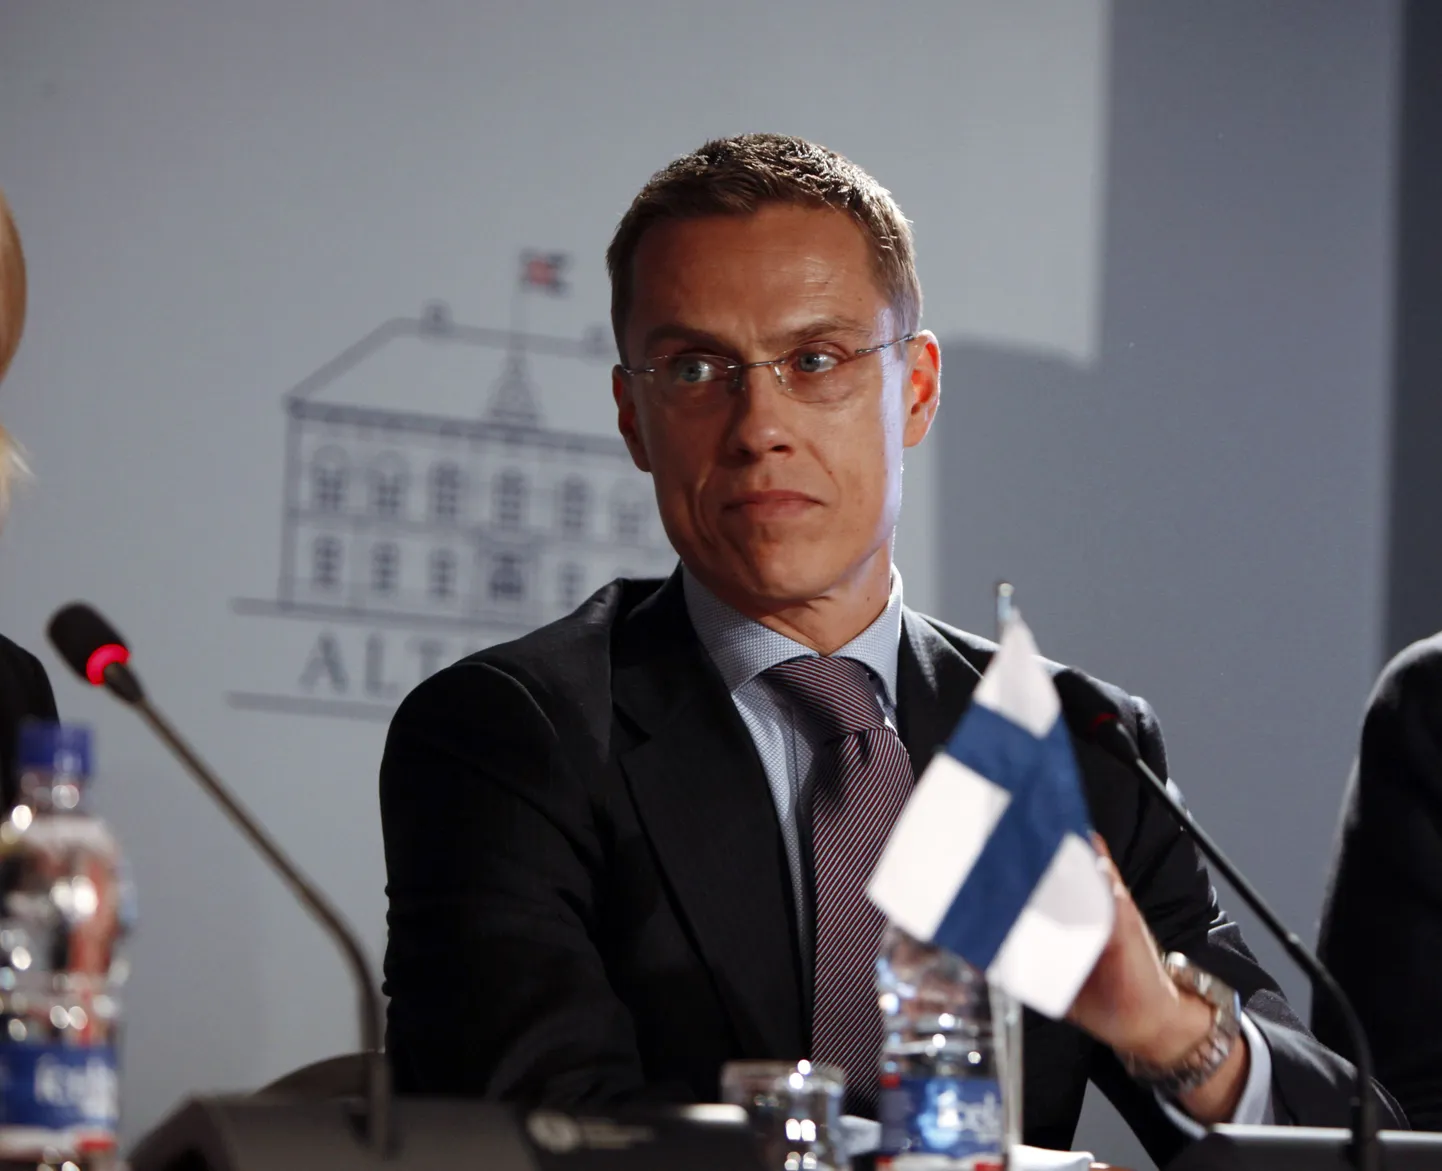 Soome välisminister Alexander Stubb